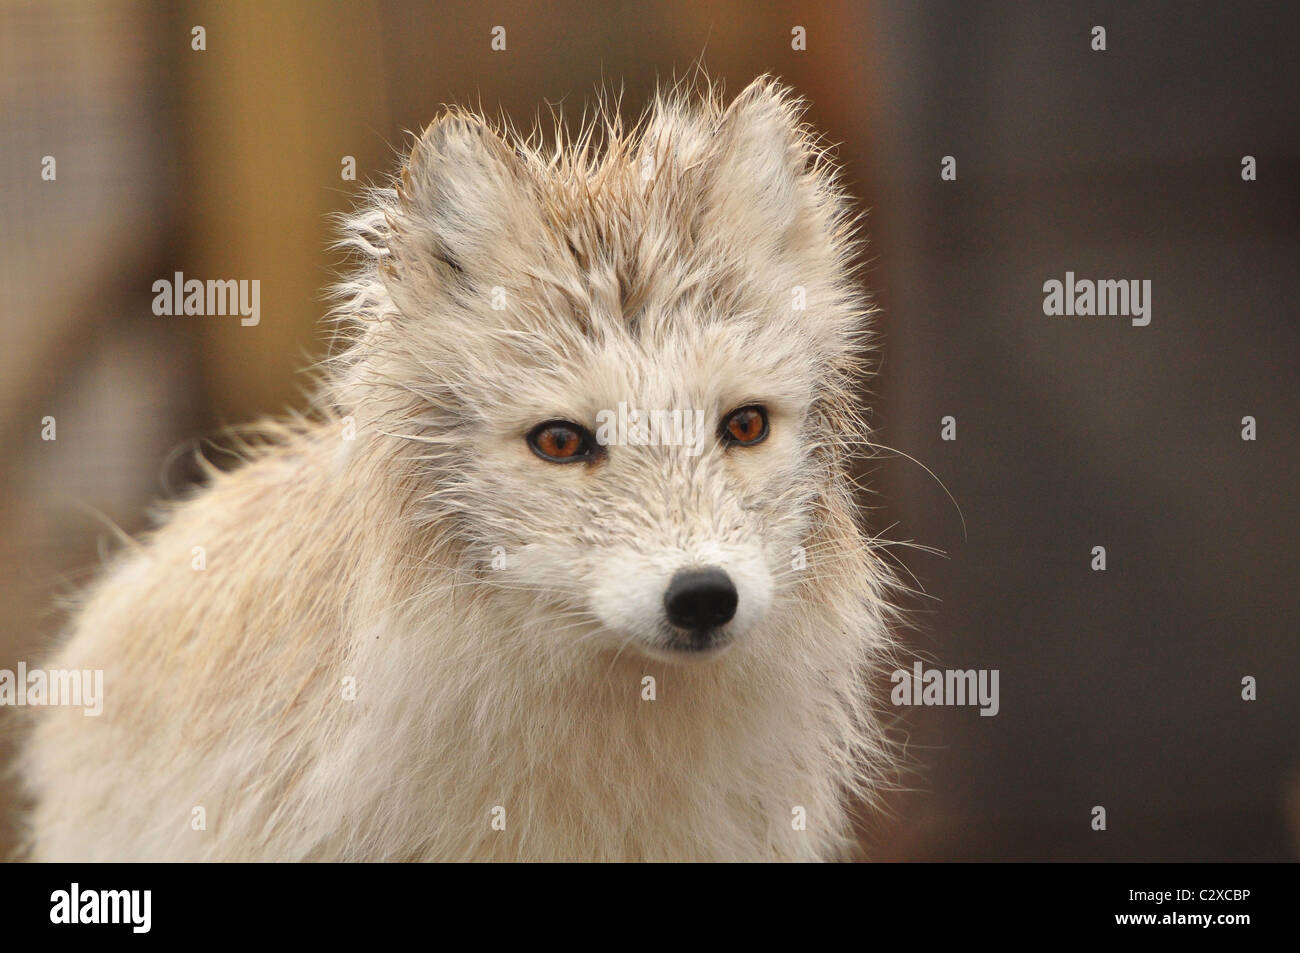 Portrait Of An Artic Fox (Vulpes lagopus) Stock Photo